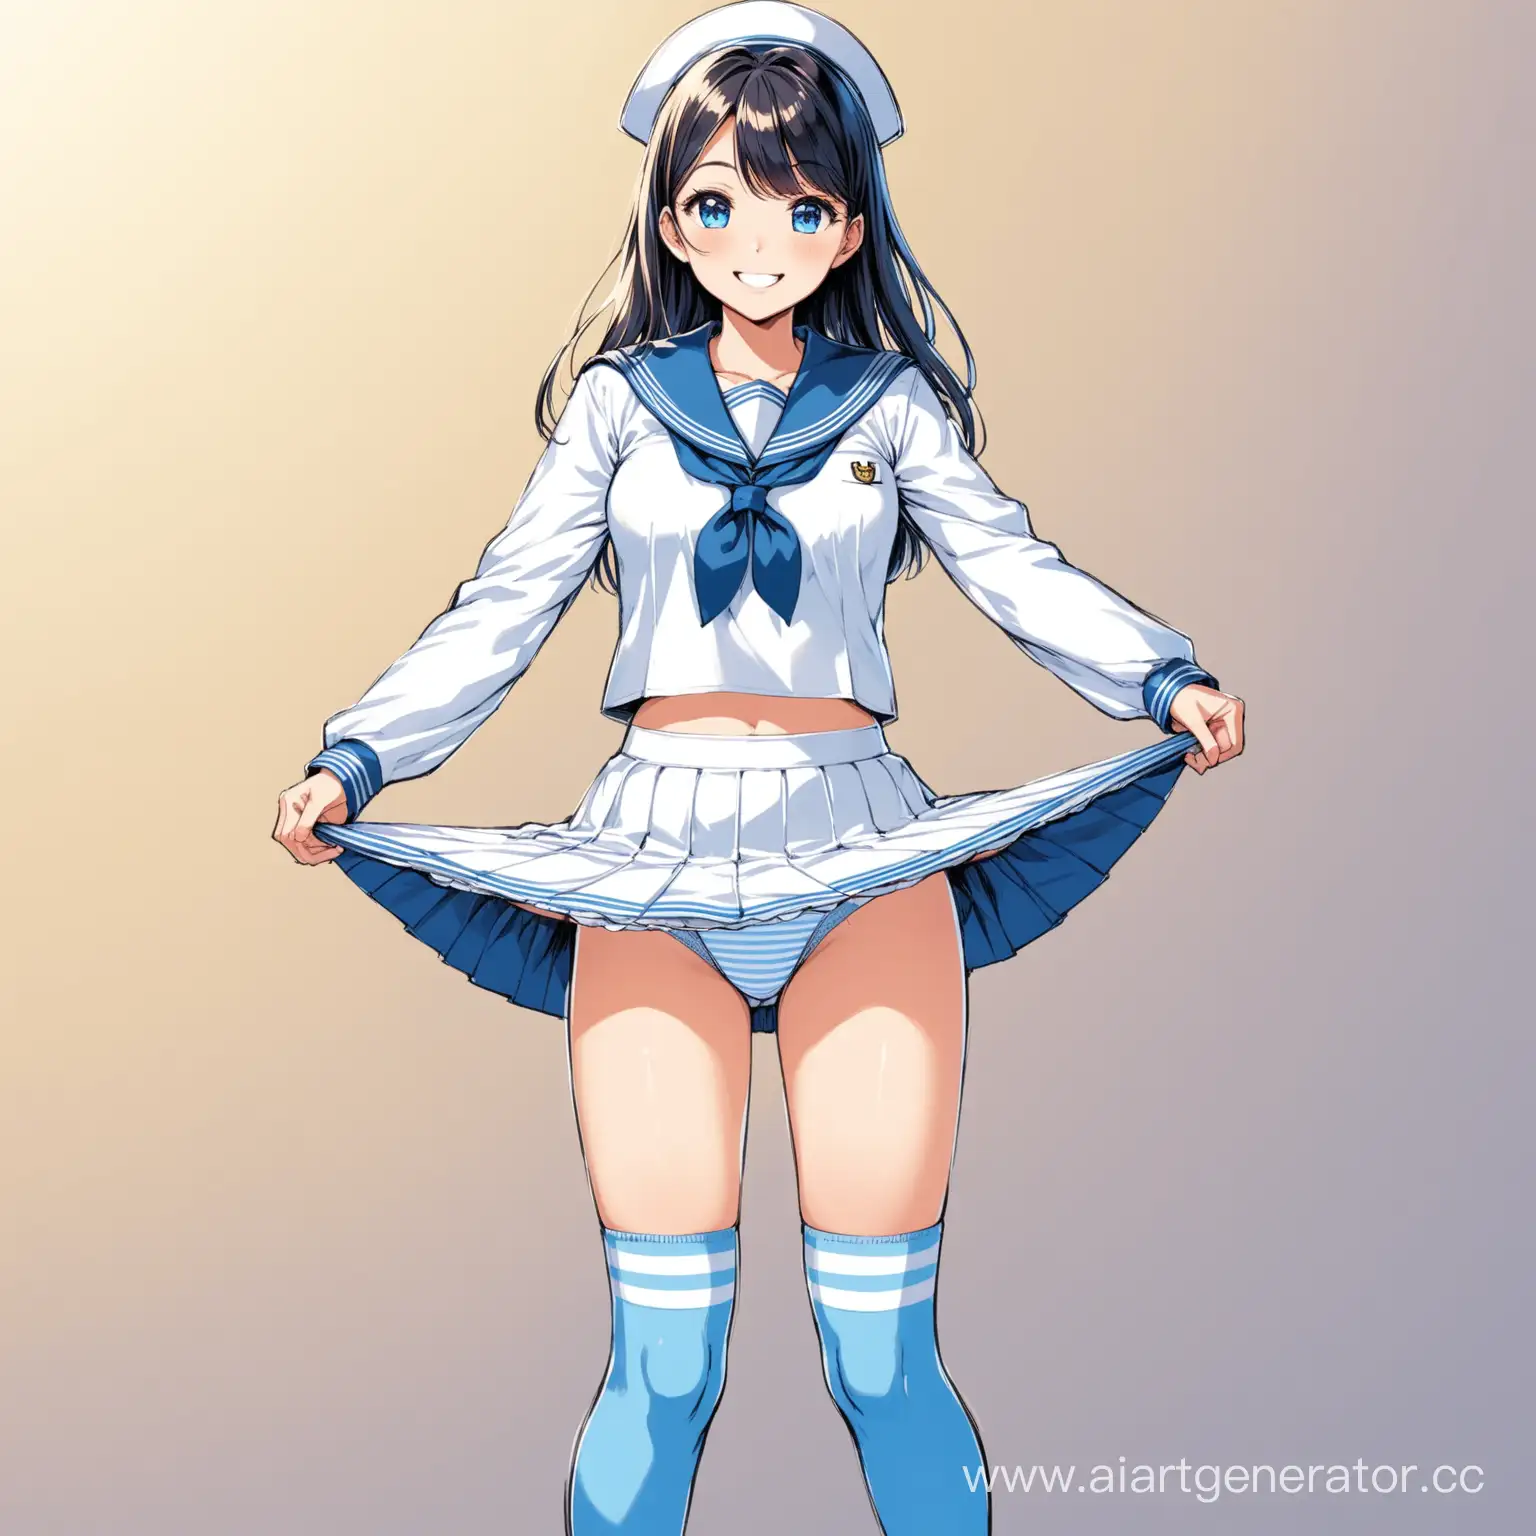 Playful-Woman-in-Sailor-Uniform-Lifting-Skirt-Revealing-Blue-Striped-Panties